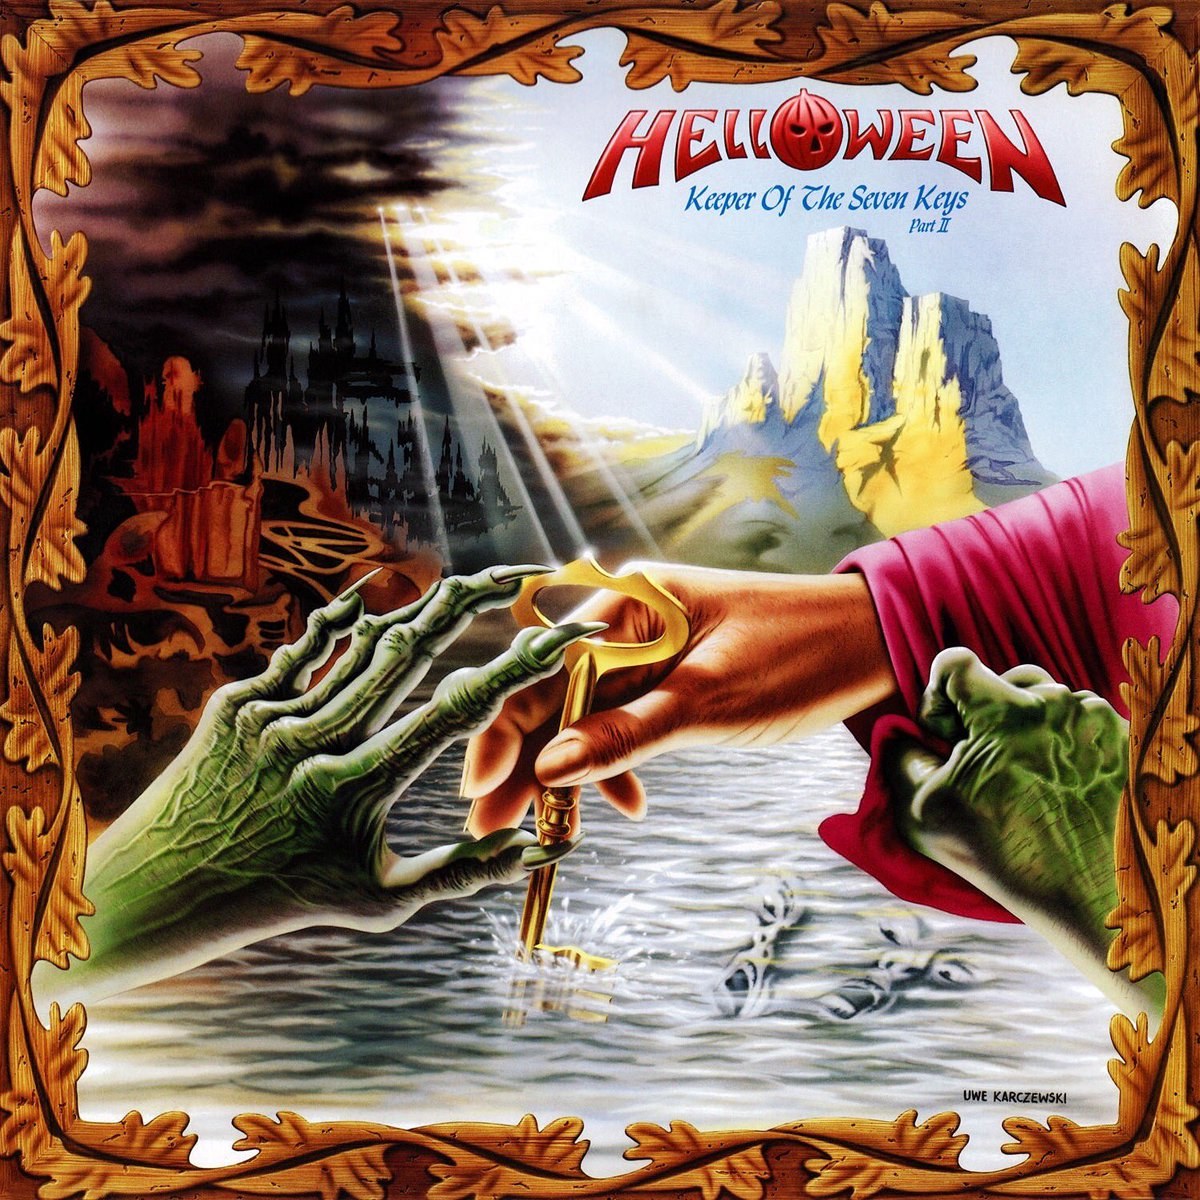 Portada de "Keeper of the Seven Keys, Pt. 2" de Helloween